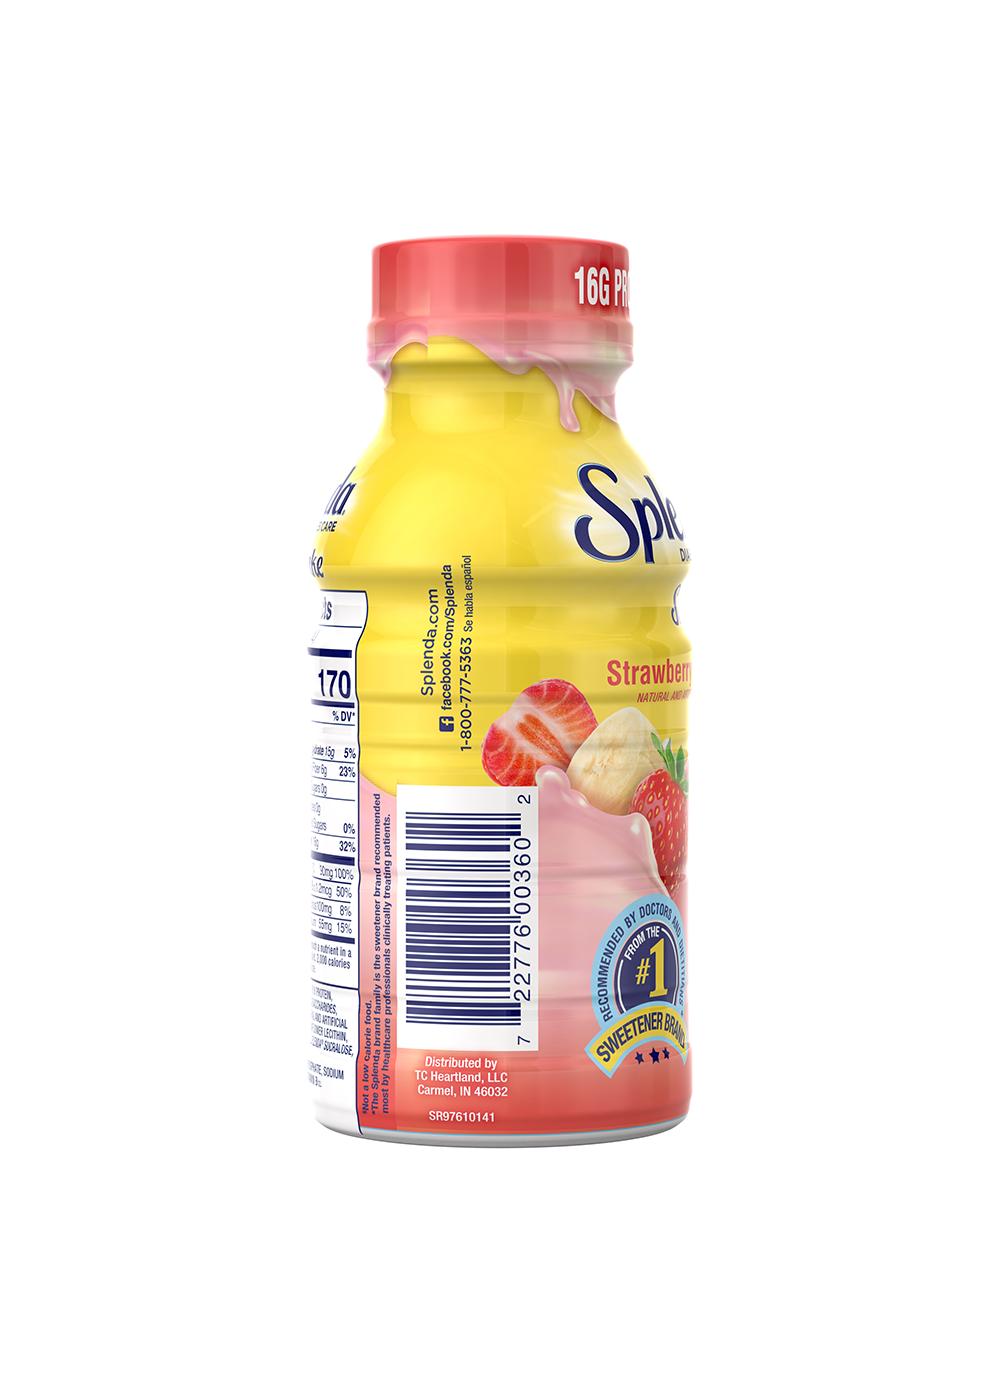 Splenda Diabetes Care Diabetes Care Strawberry Banana Shake 8 oz Bottles; image 3 of 5